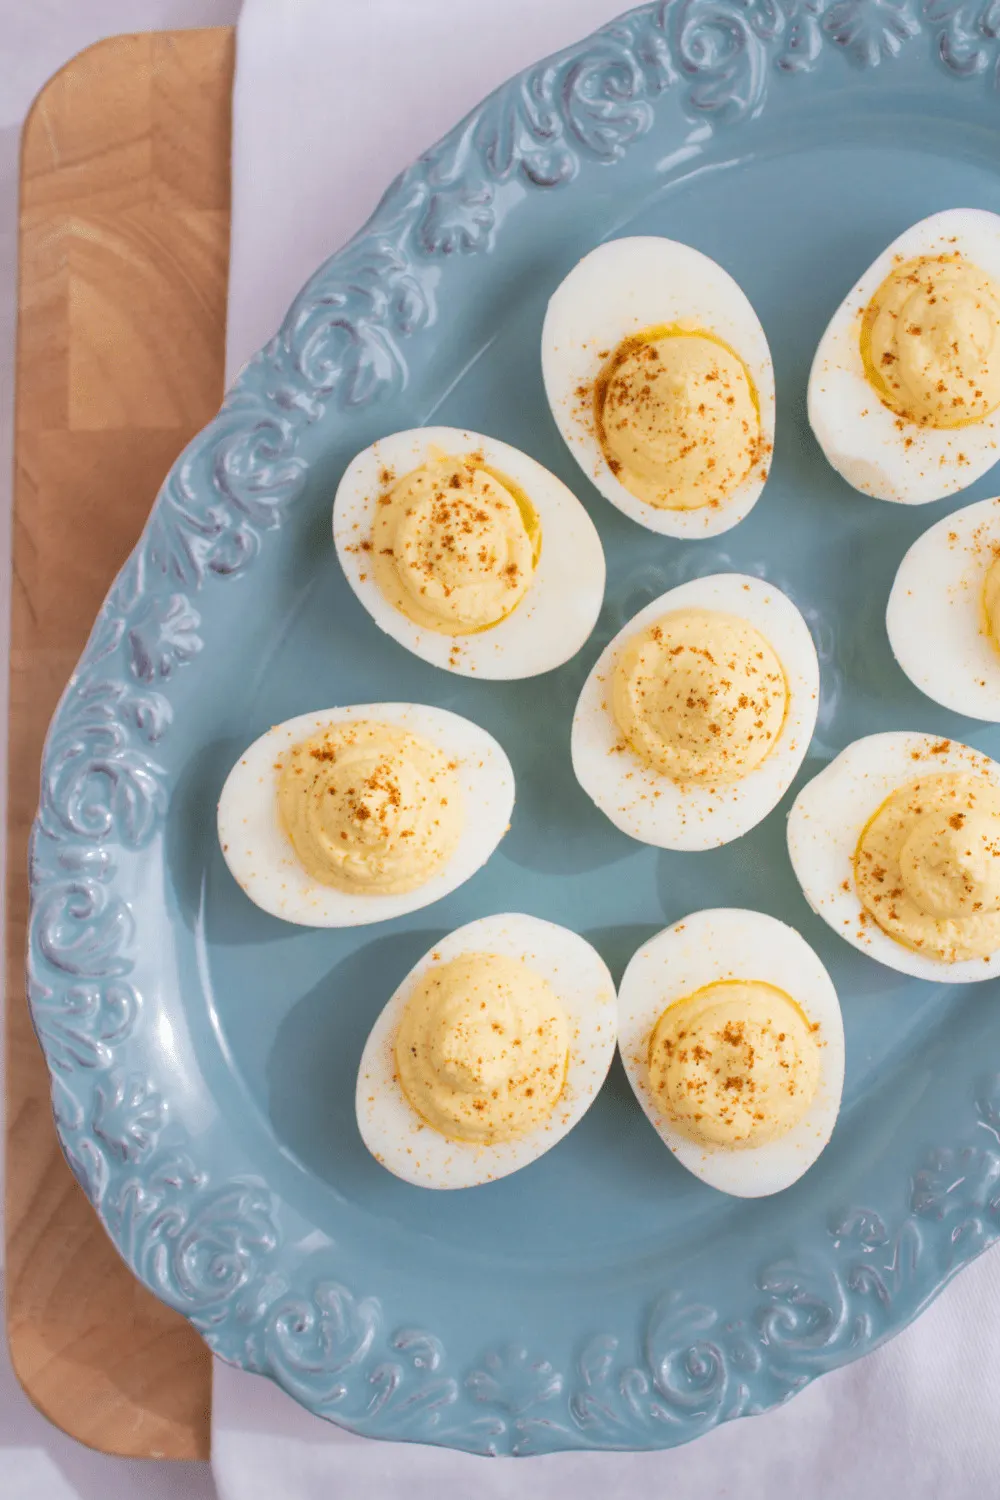 Healthy Easter Recipes - Deviled Eggs via Fantastic Food